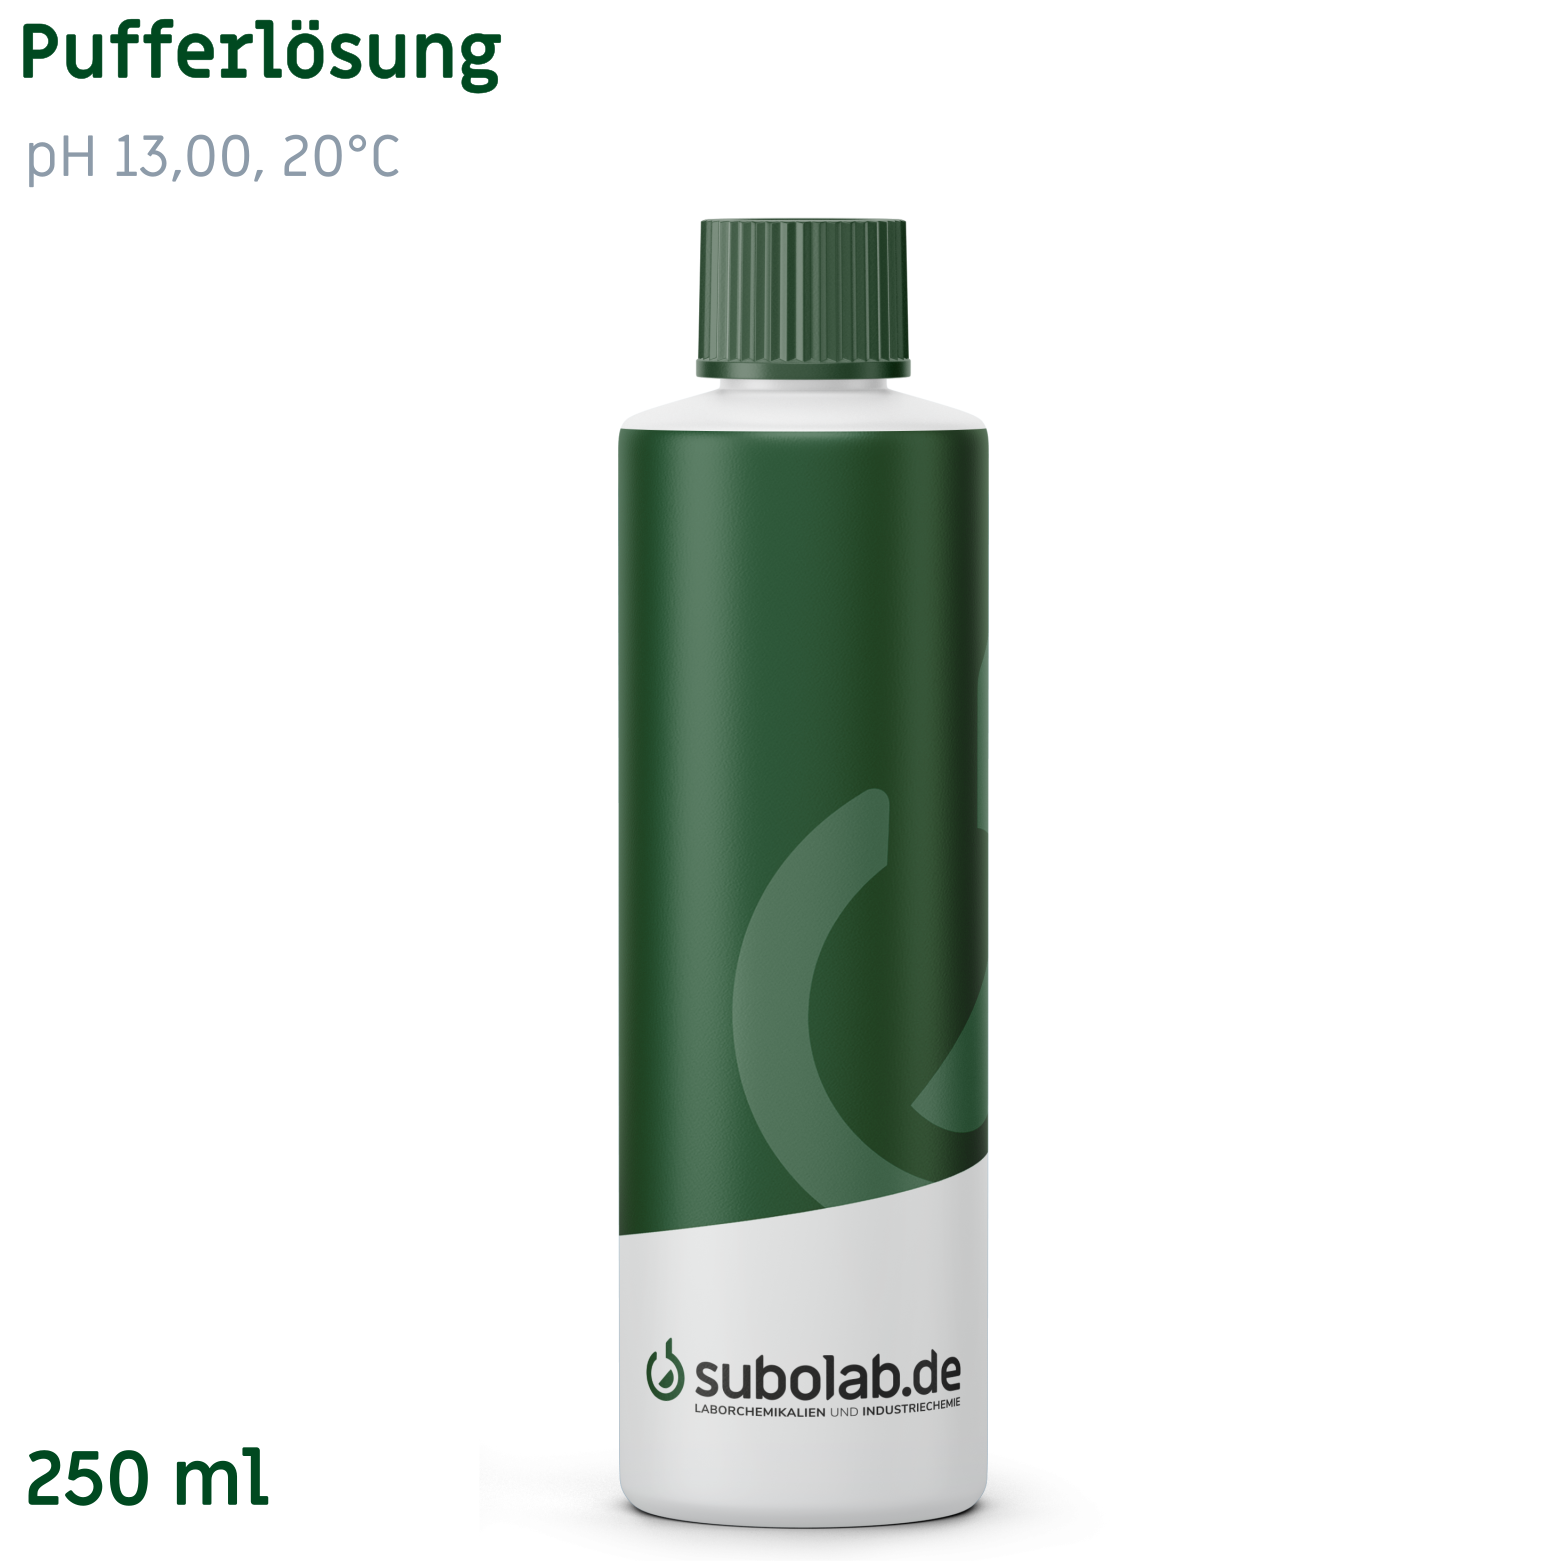 Bild von Pufferlösung pH 13,00, 20°C (Kaliumchlorid, Natronlauge) (250 ml)